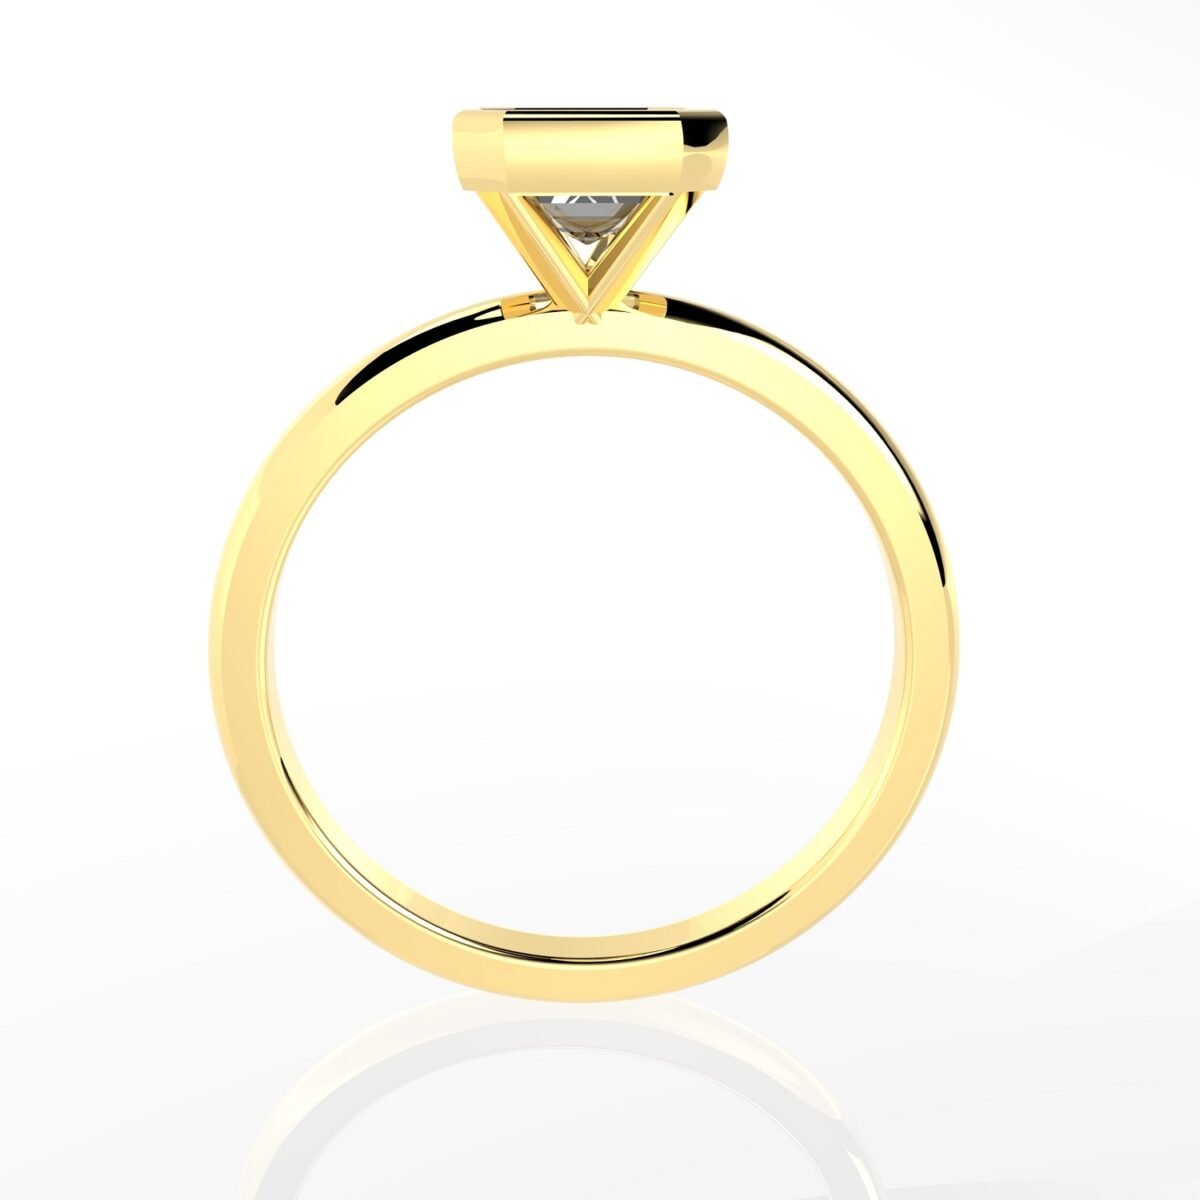 Bezel Set modern wedding ring